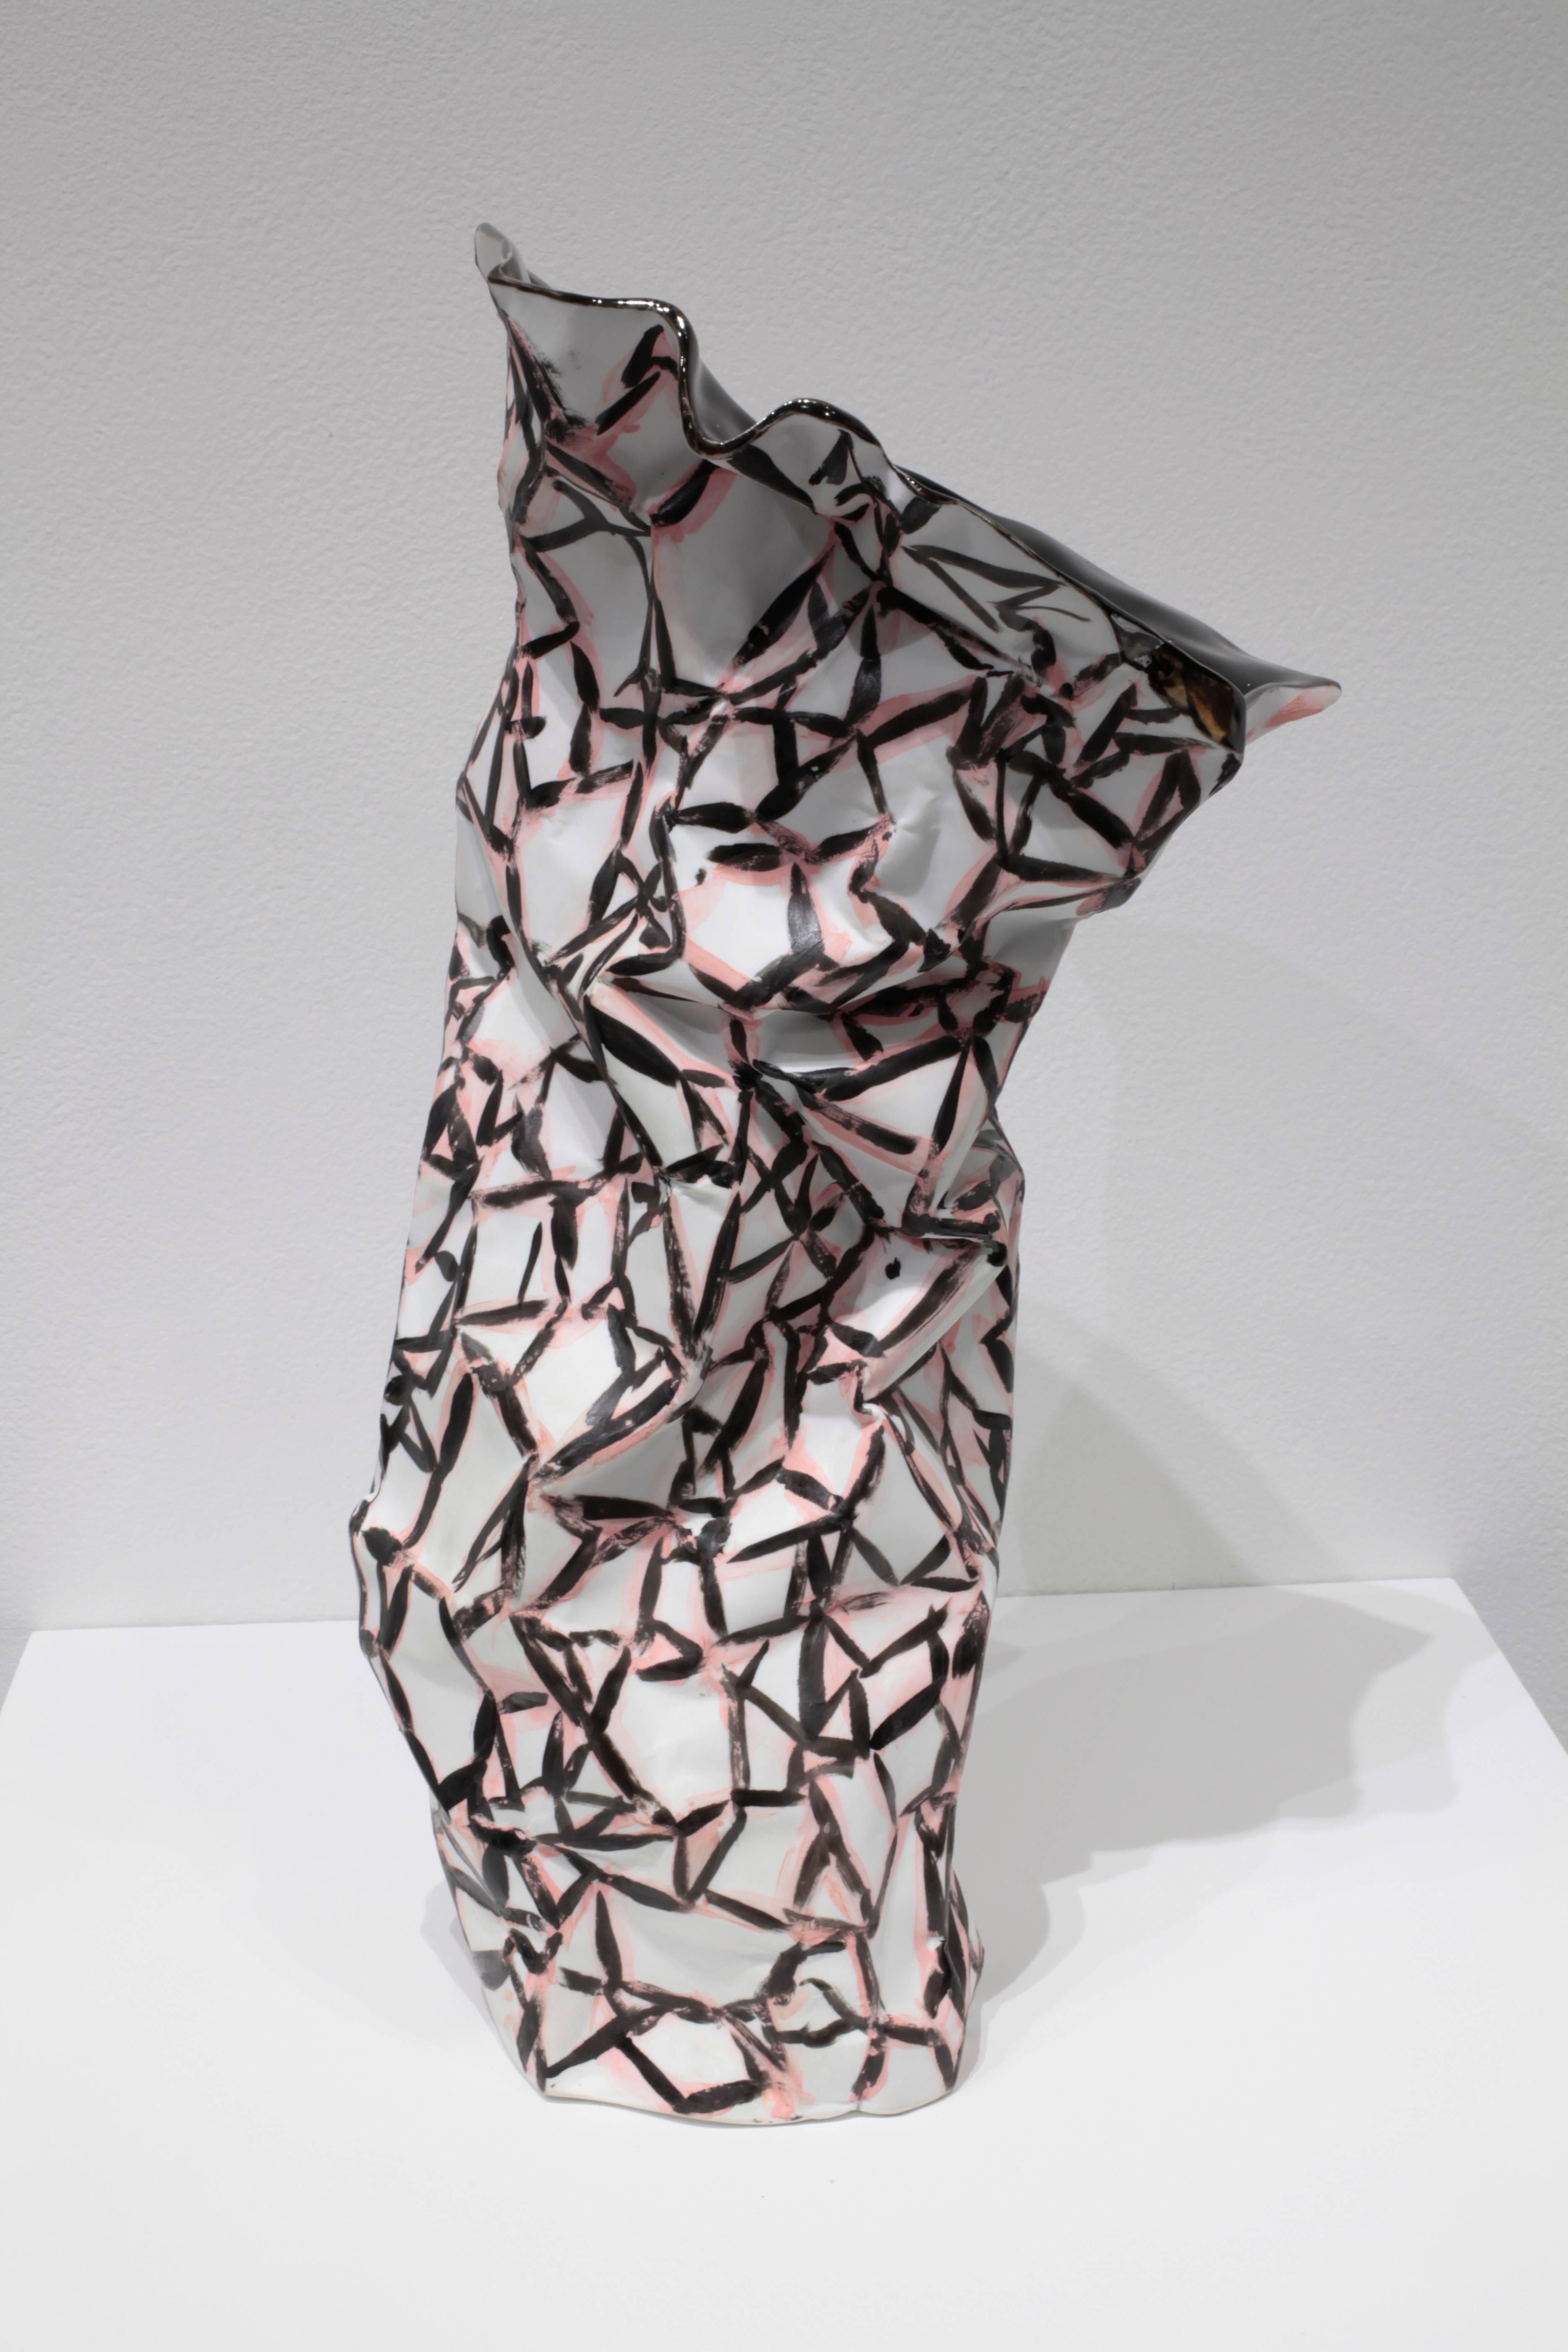 Jingdezhen 3 - Sculpture by Terry Rose